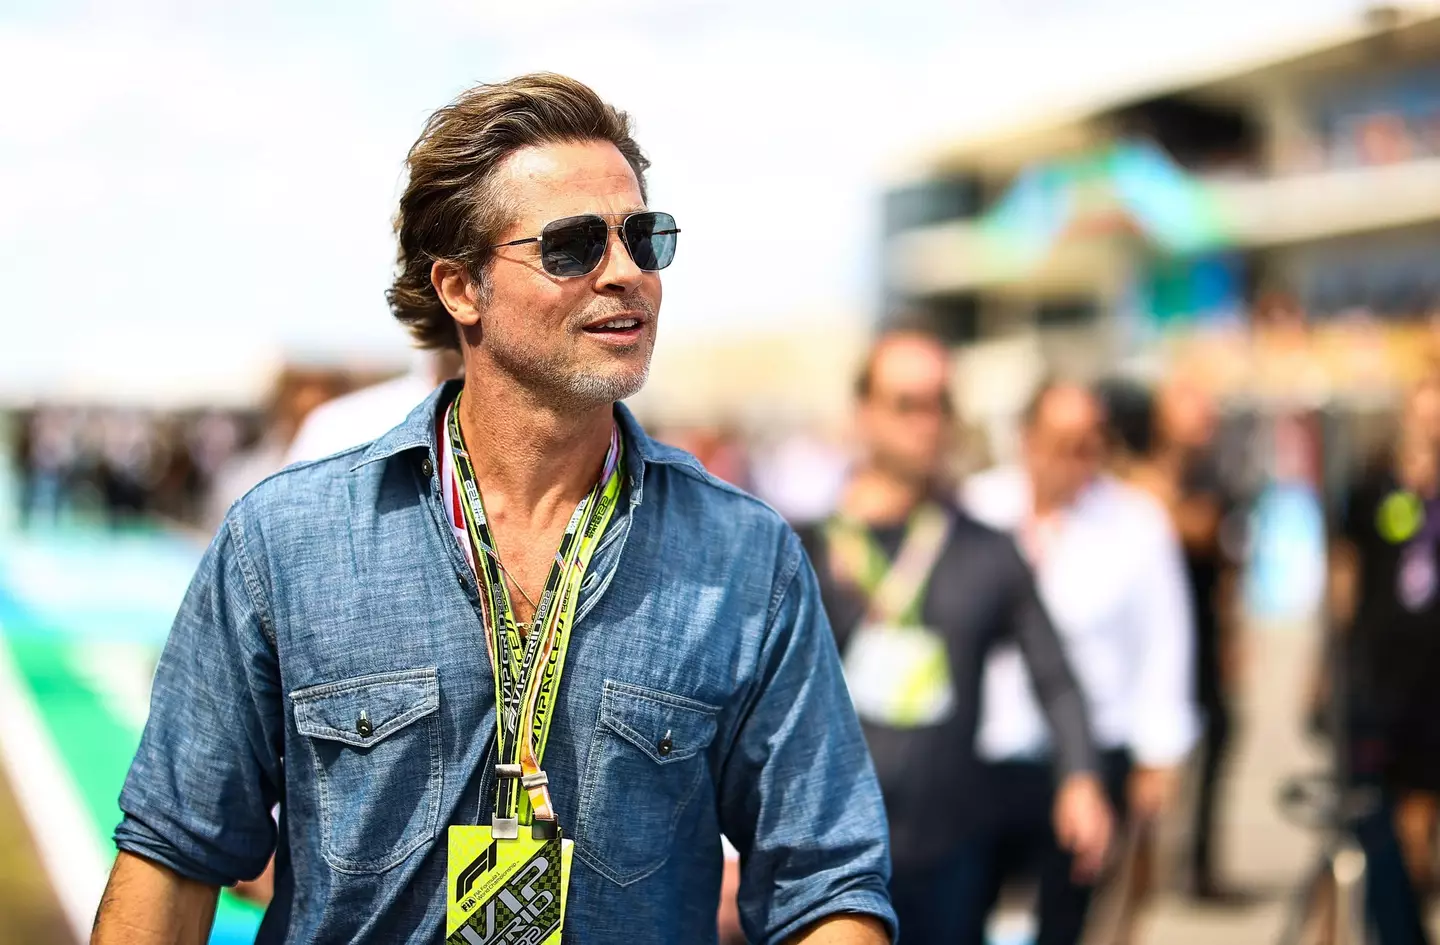 Brad Pitt at the F1 grand prix in Austin last month.